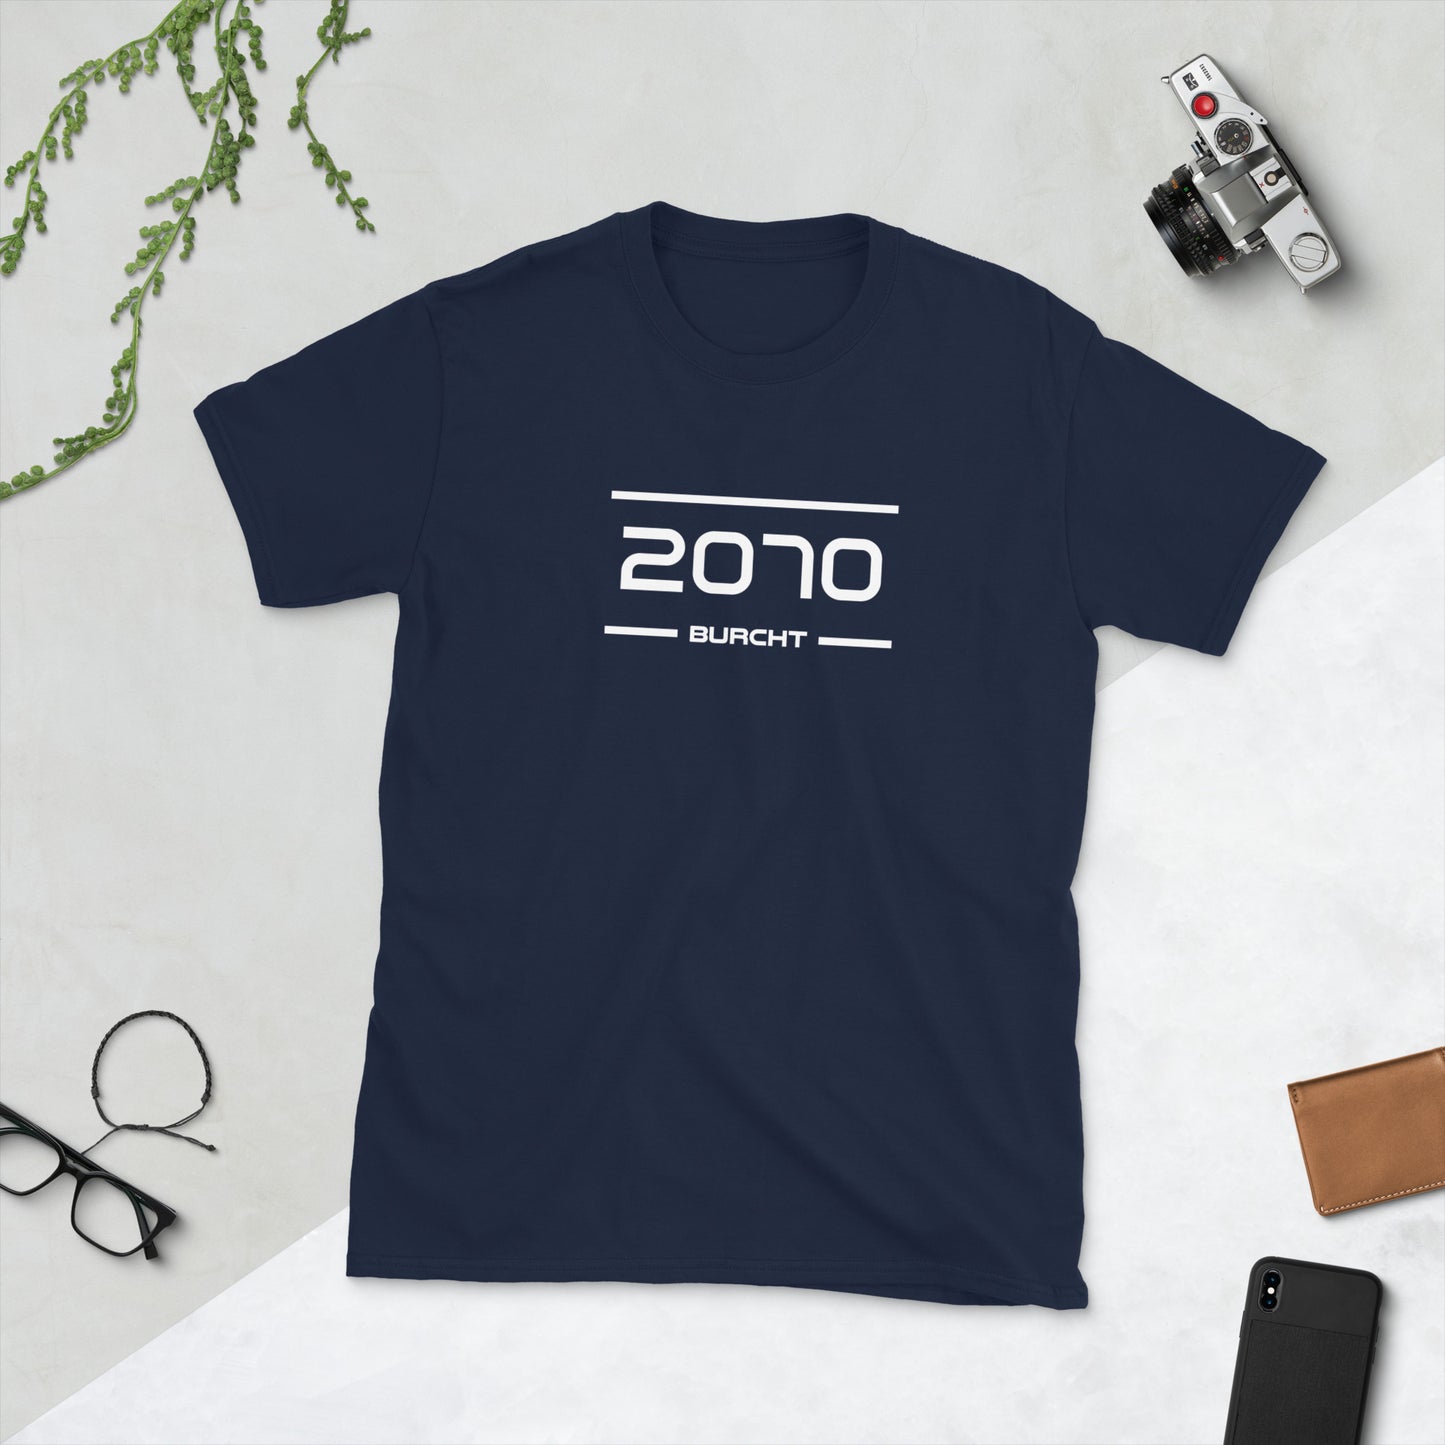 Tshirt - 2070 - Burcht